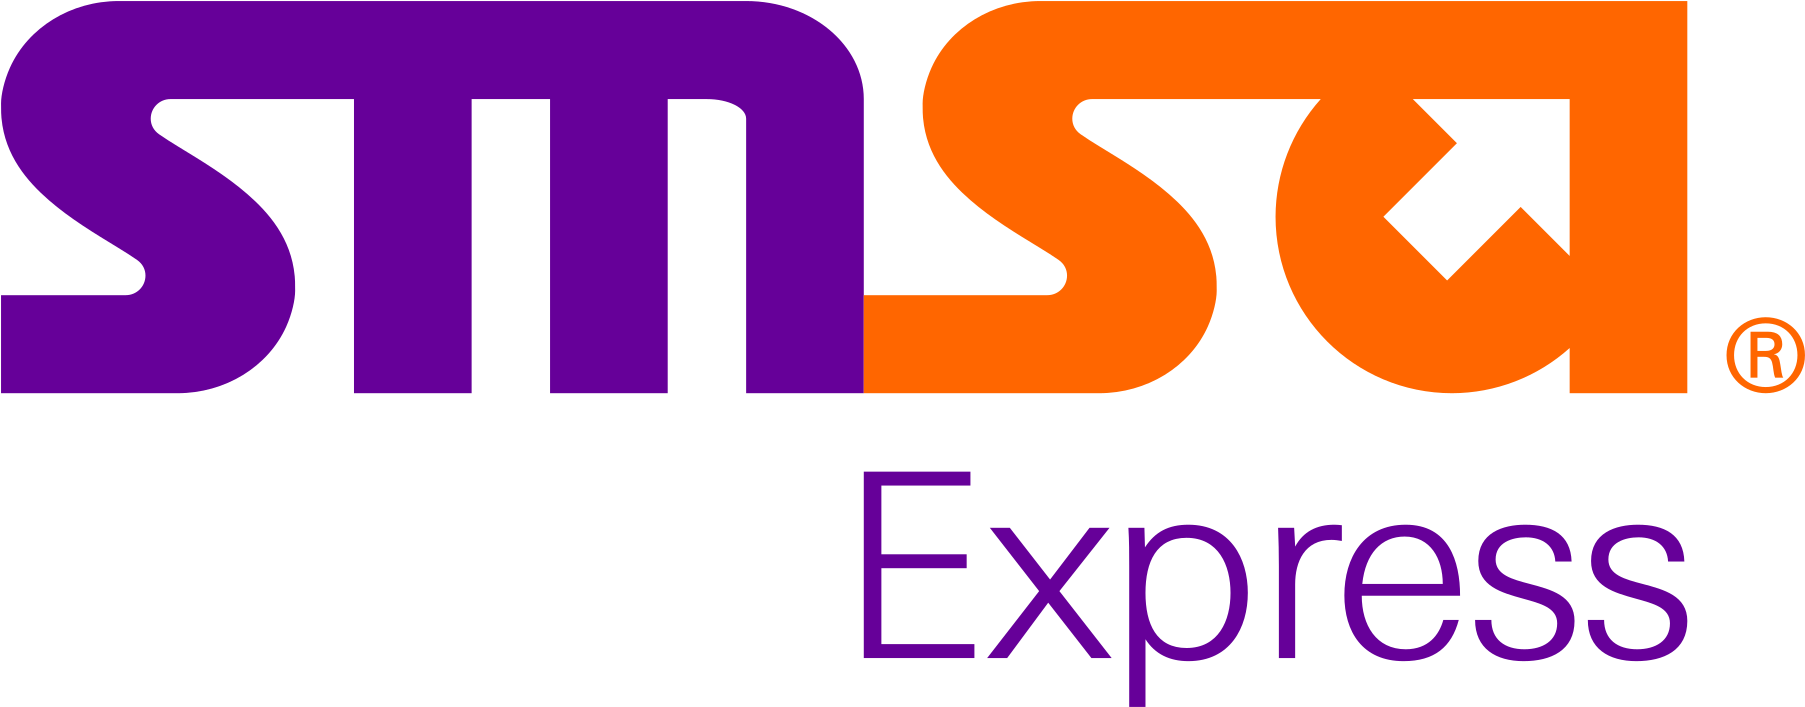 Free Fonts Fedex Logo Font - Smsa Express (2000x902)